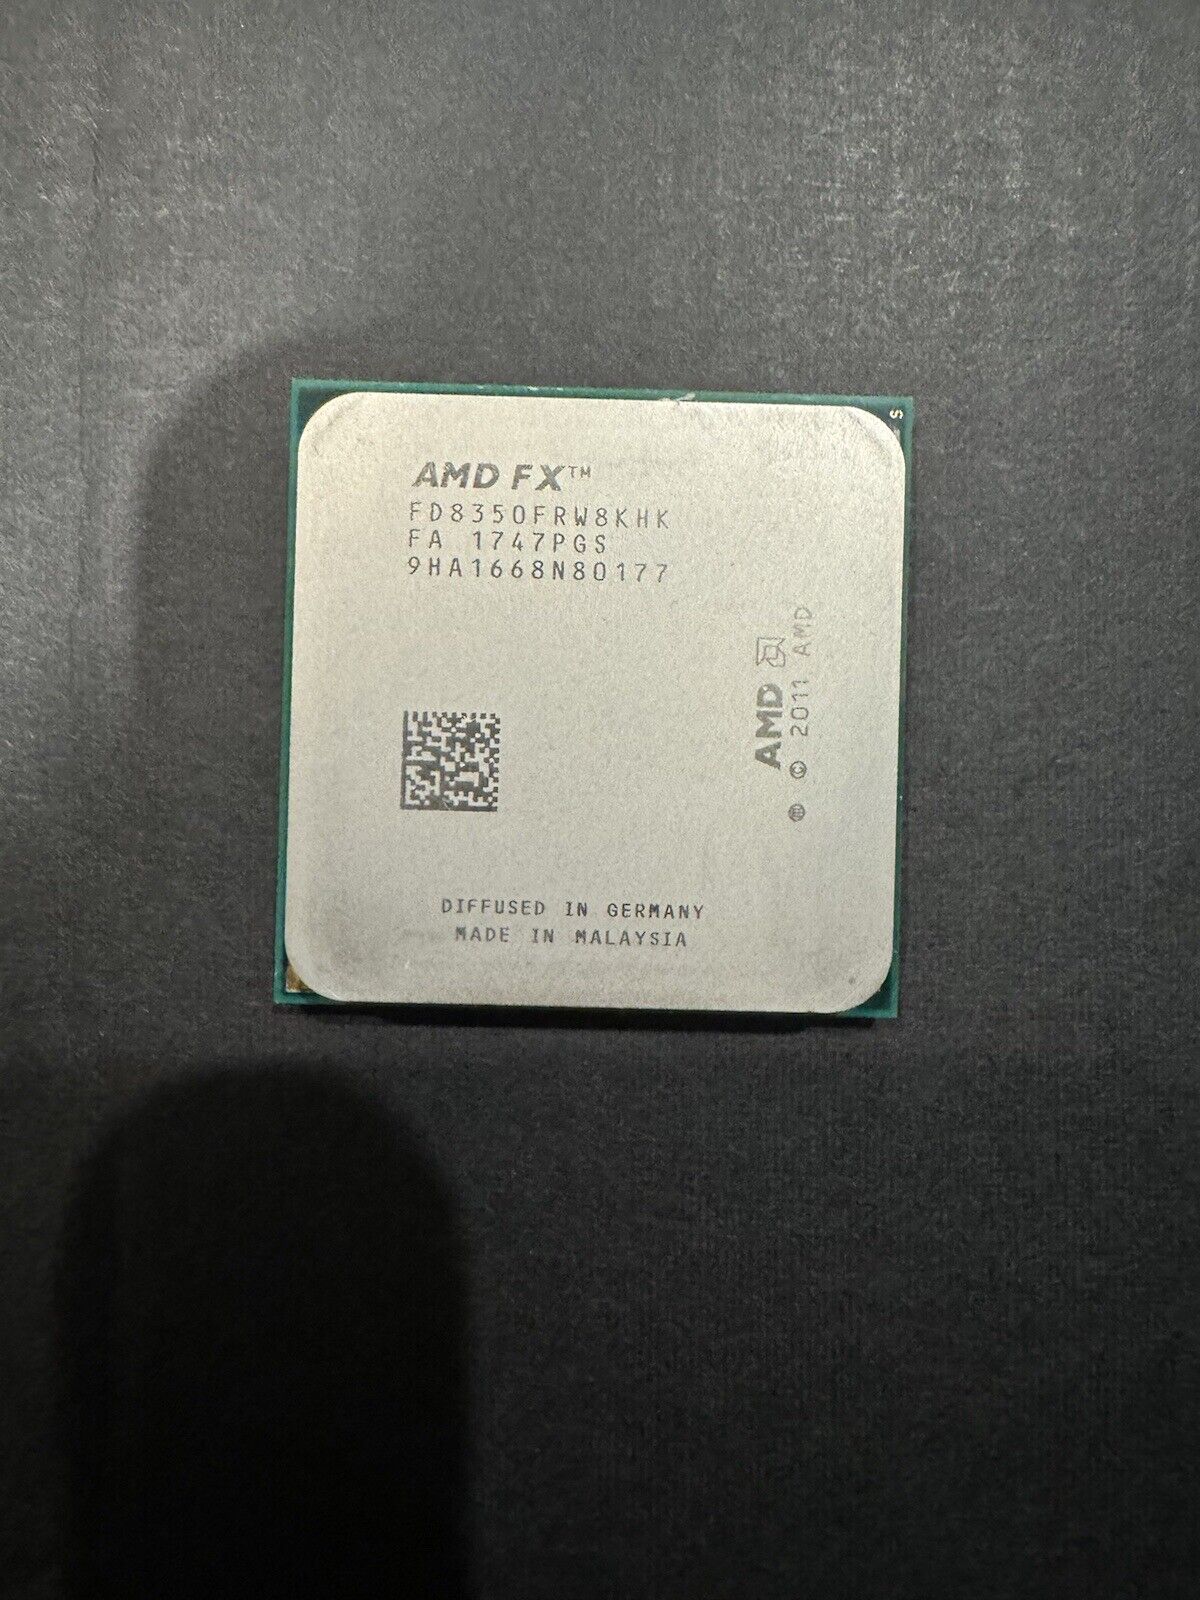 AMD FX8350 FX 8350 Black Edition 4GHz AM3+ 8-Core Processor CPU TESTED